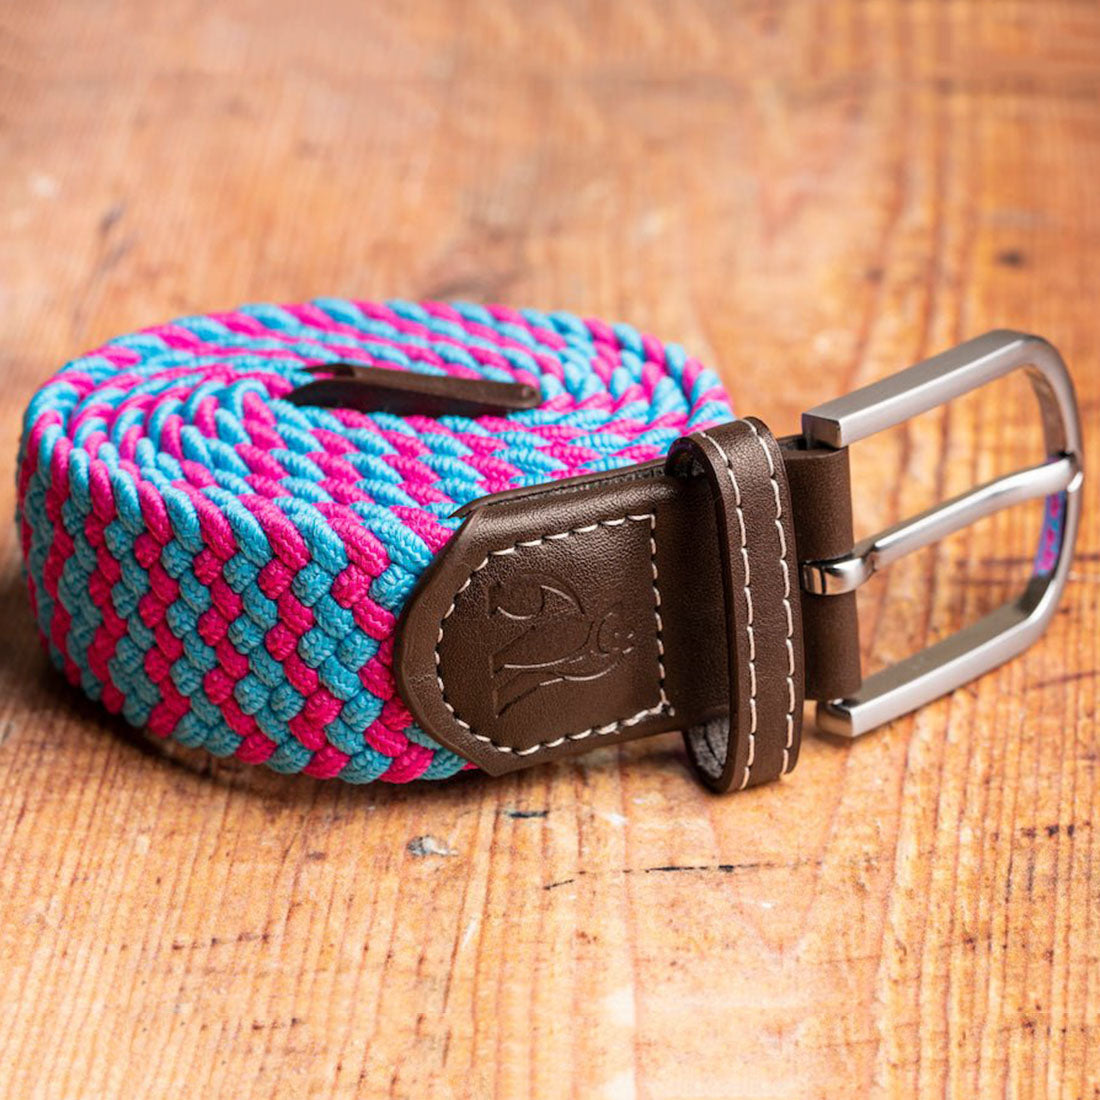 Woven Belt - Blue / Pink Zigzag